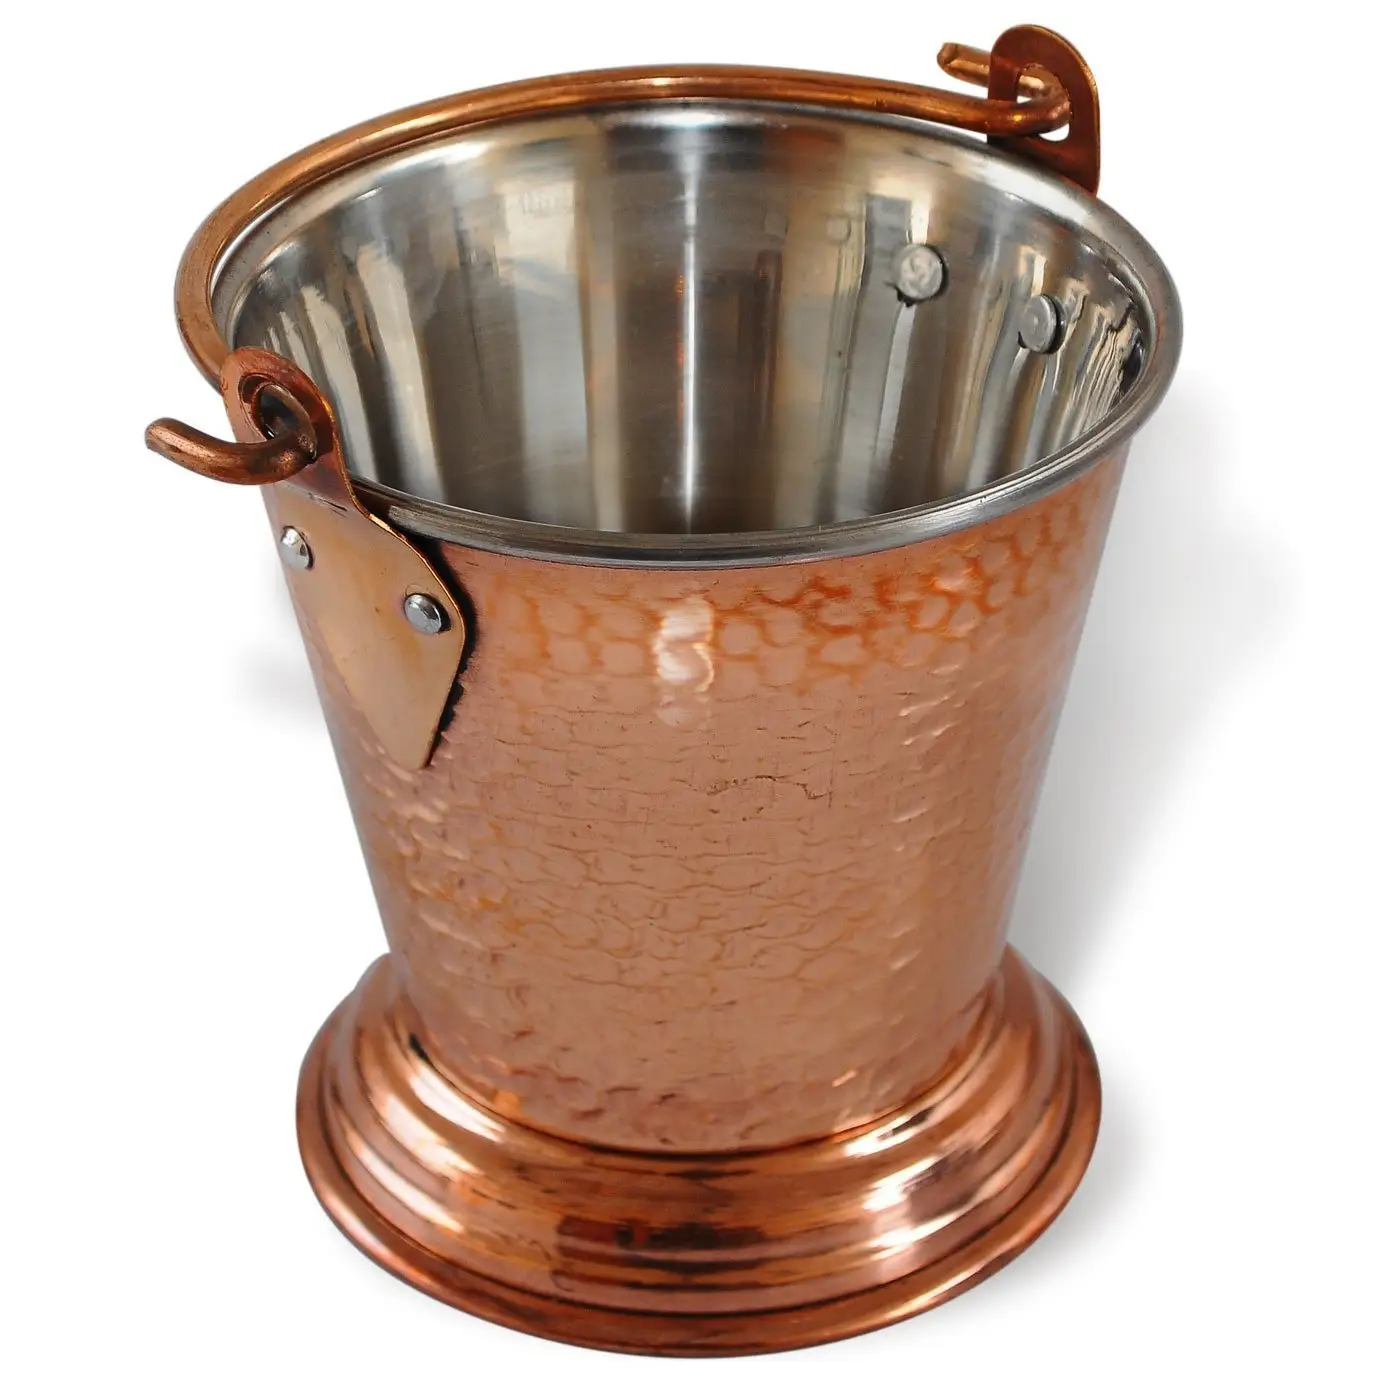 Hot sale Indian Copper Dinner Bowl Serveware bucket/balti Diameter 6 Inches for Food serve home restaurant kitchen gift